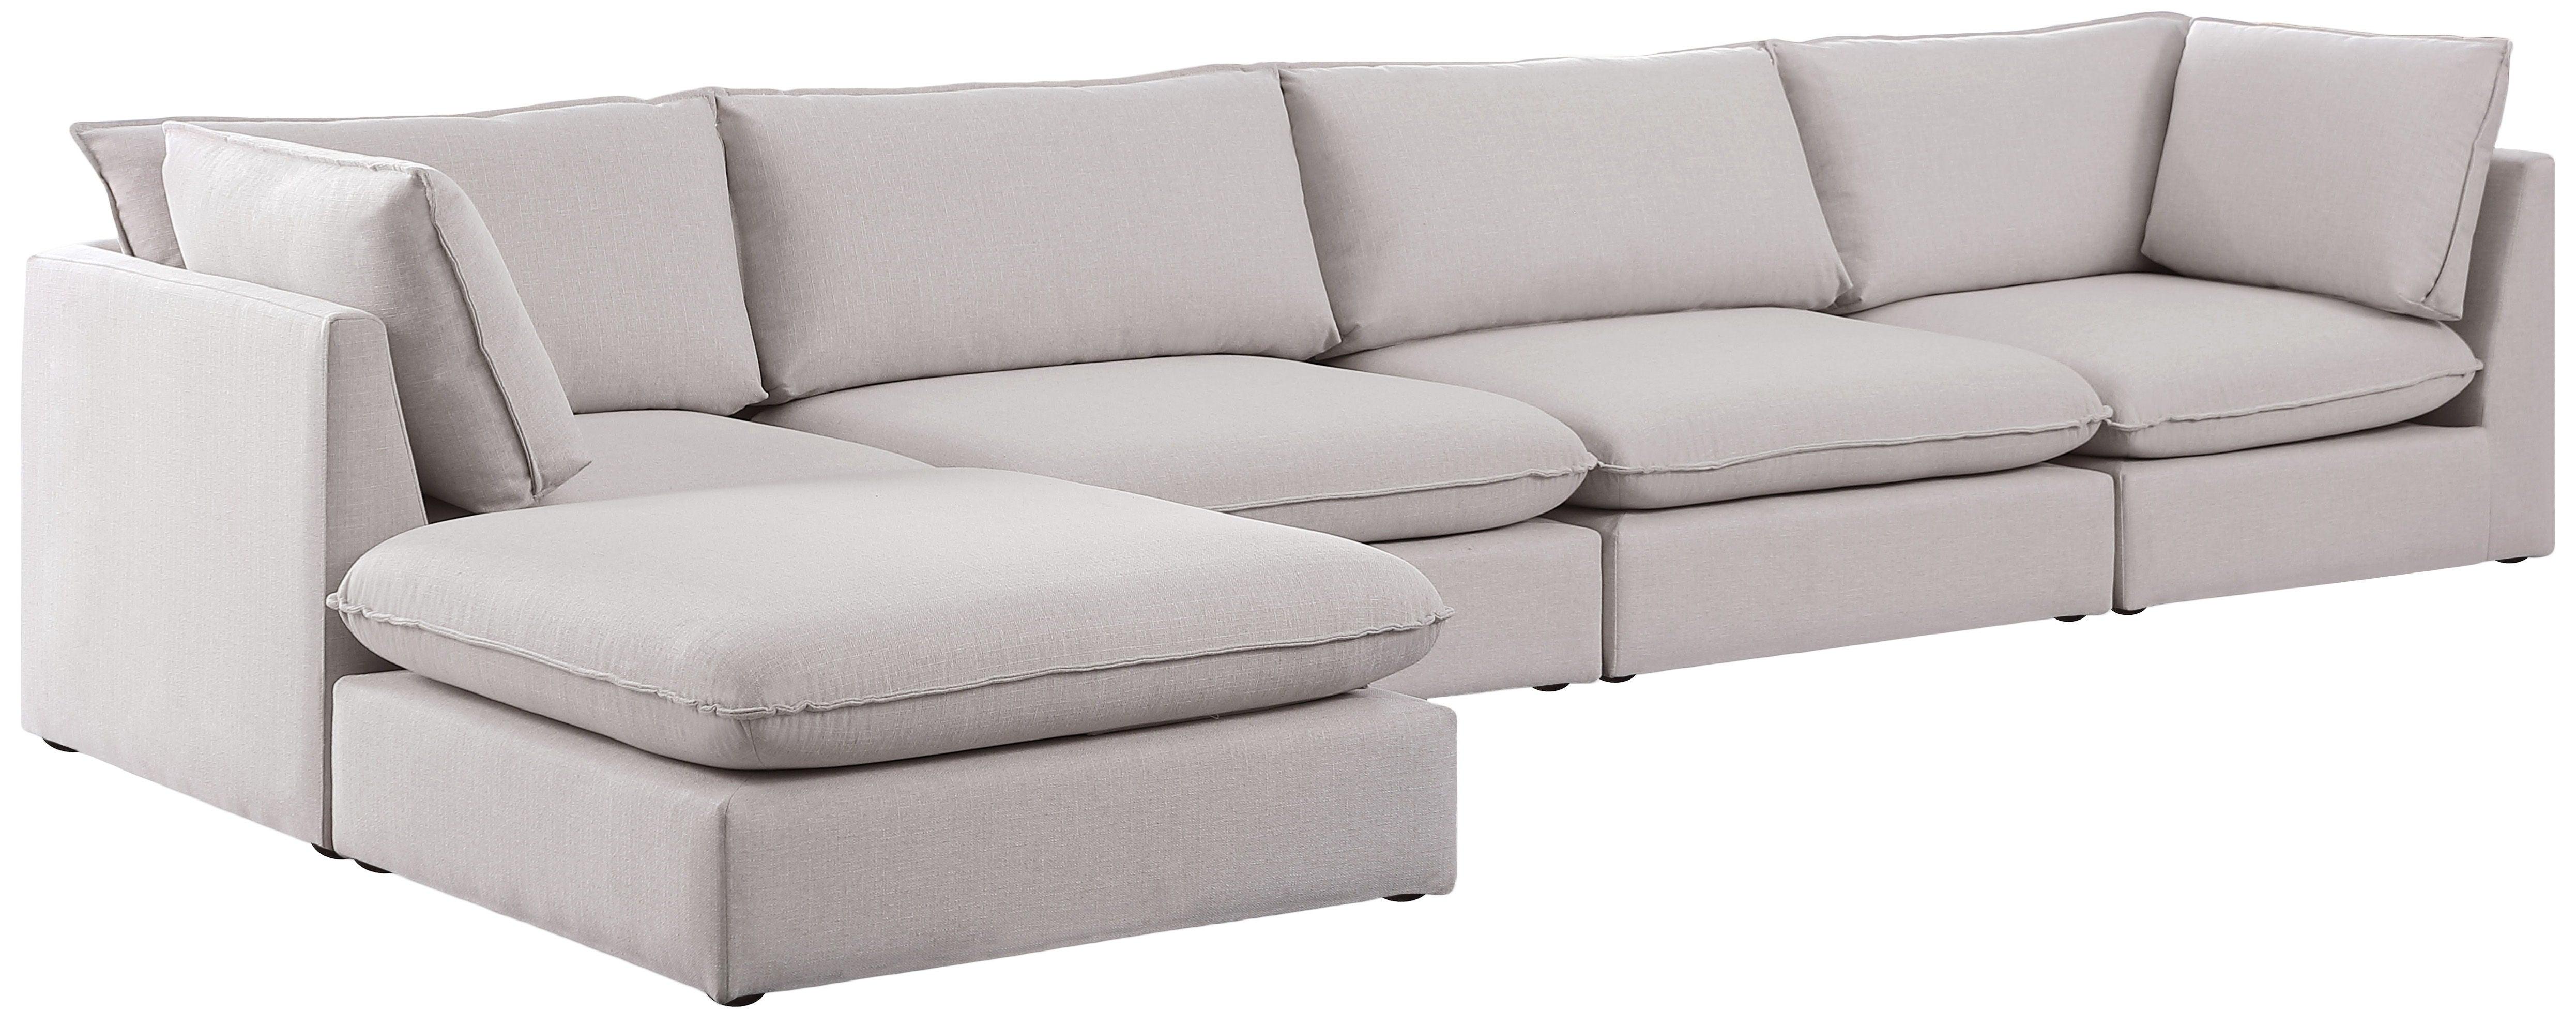 Meridian Furniture - Mackenzie - Modular Sectional 5 Piece - Beige - Fabric - Modern & Contemporary - 5th Avenue Furniture